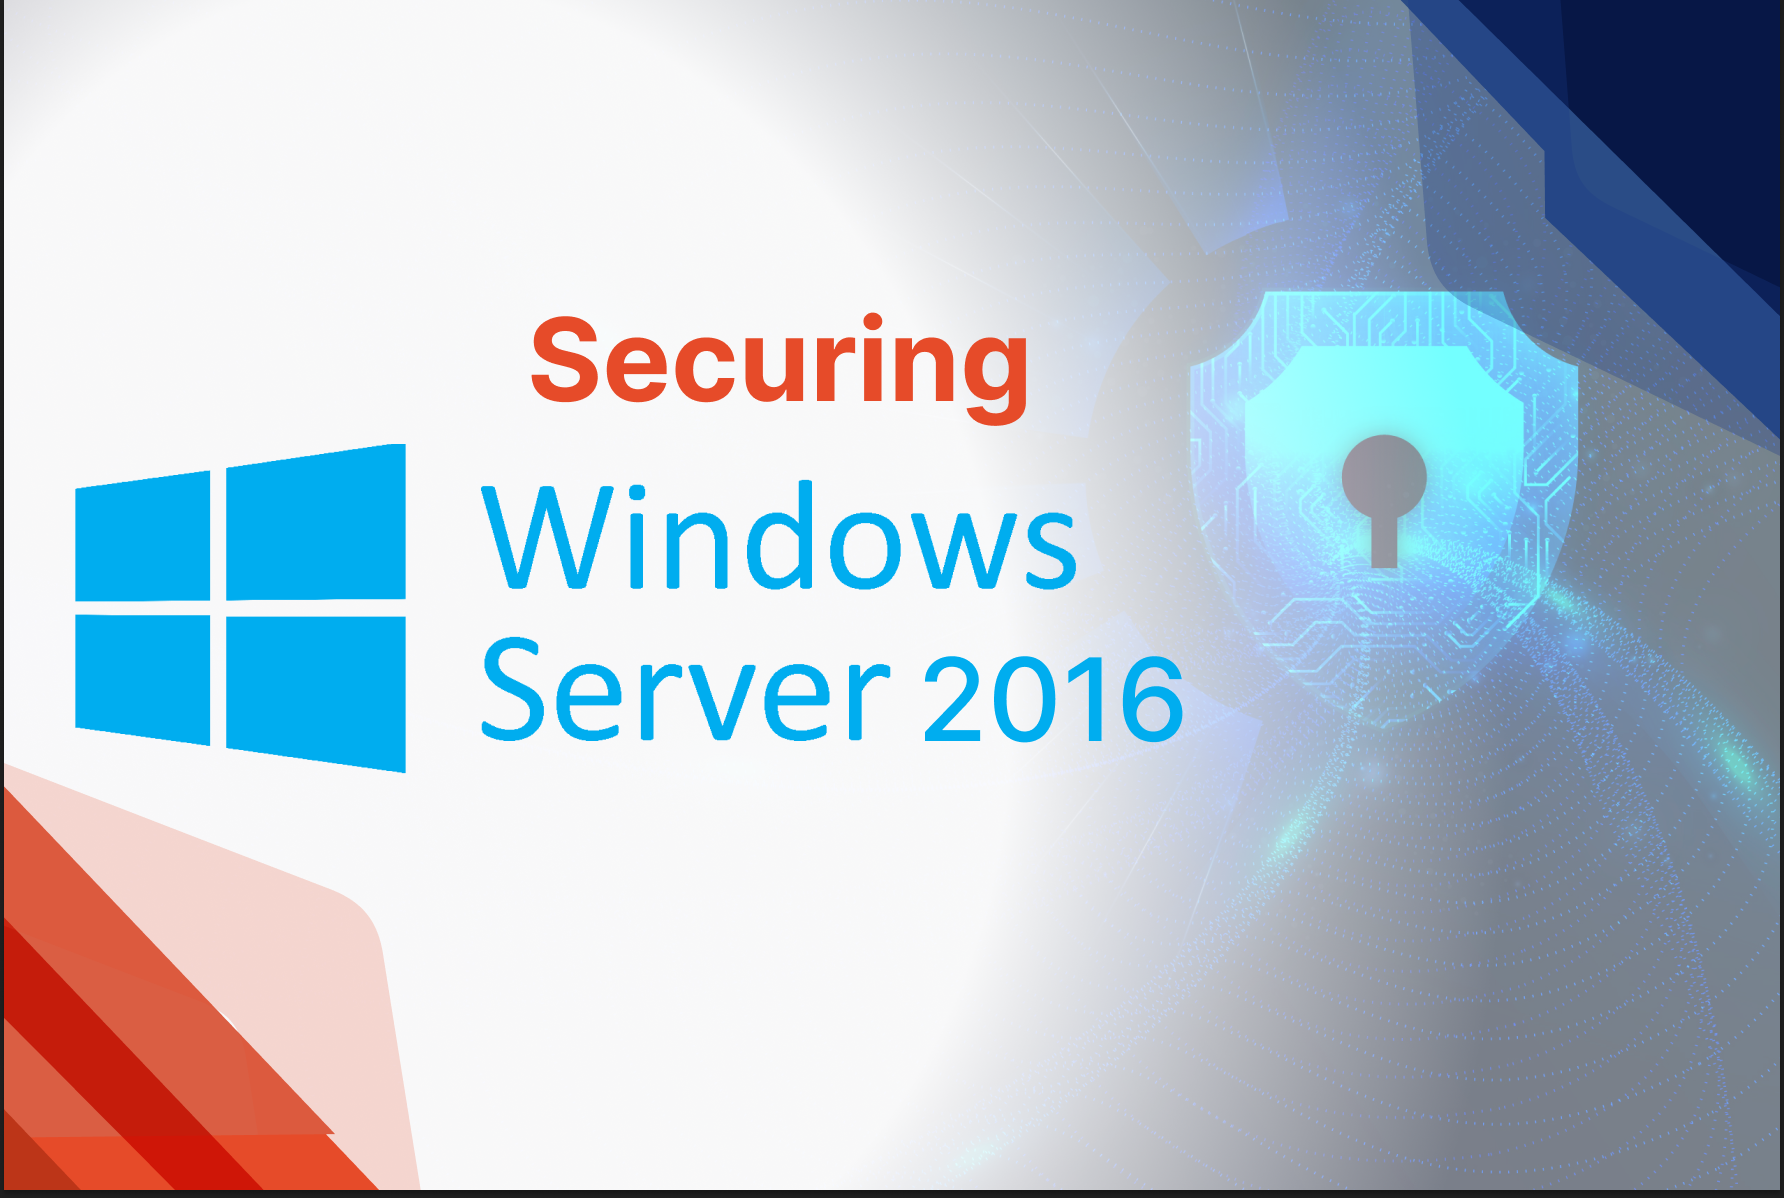 Securing Windows Server 2016